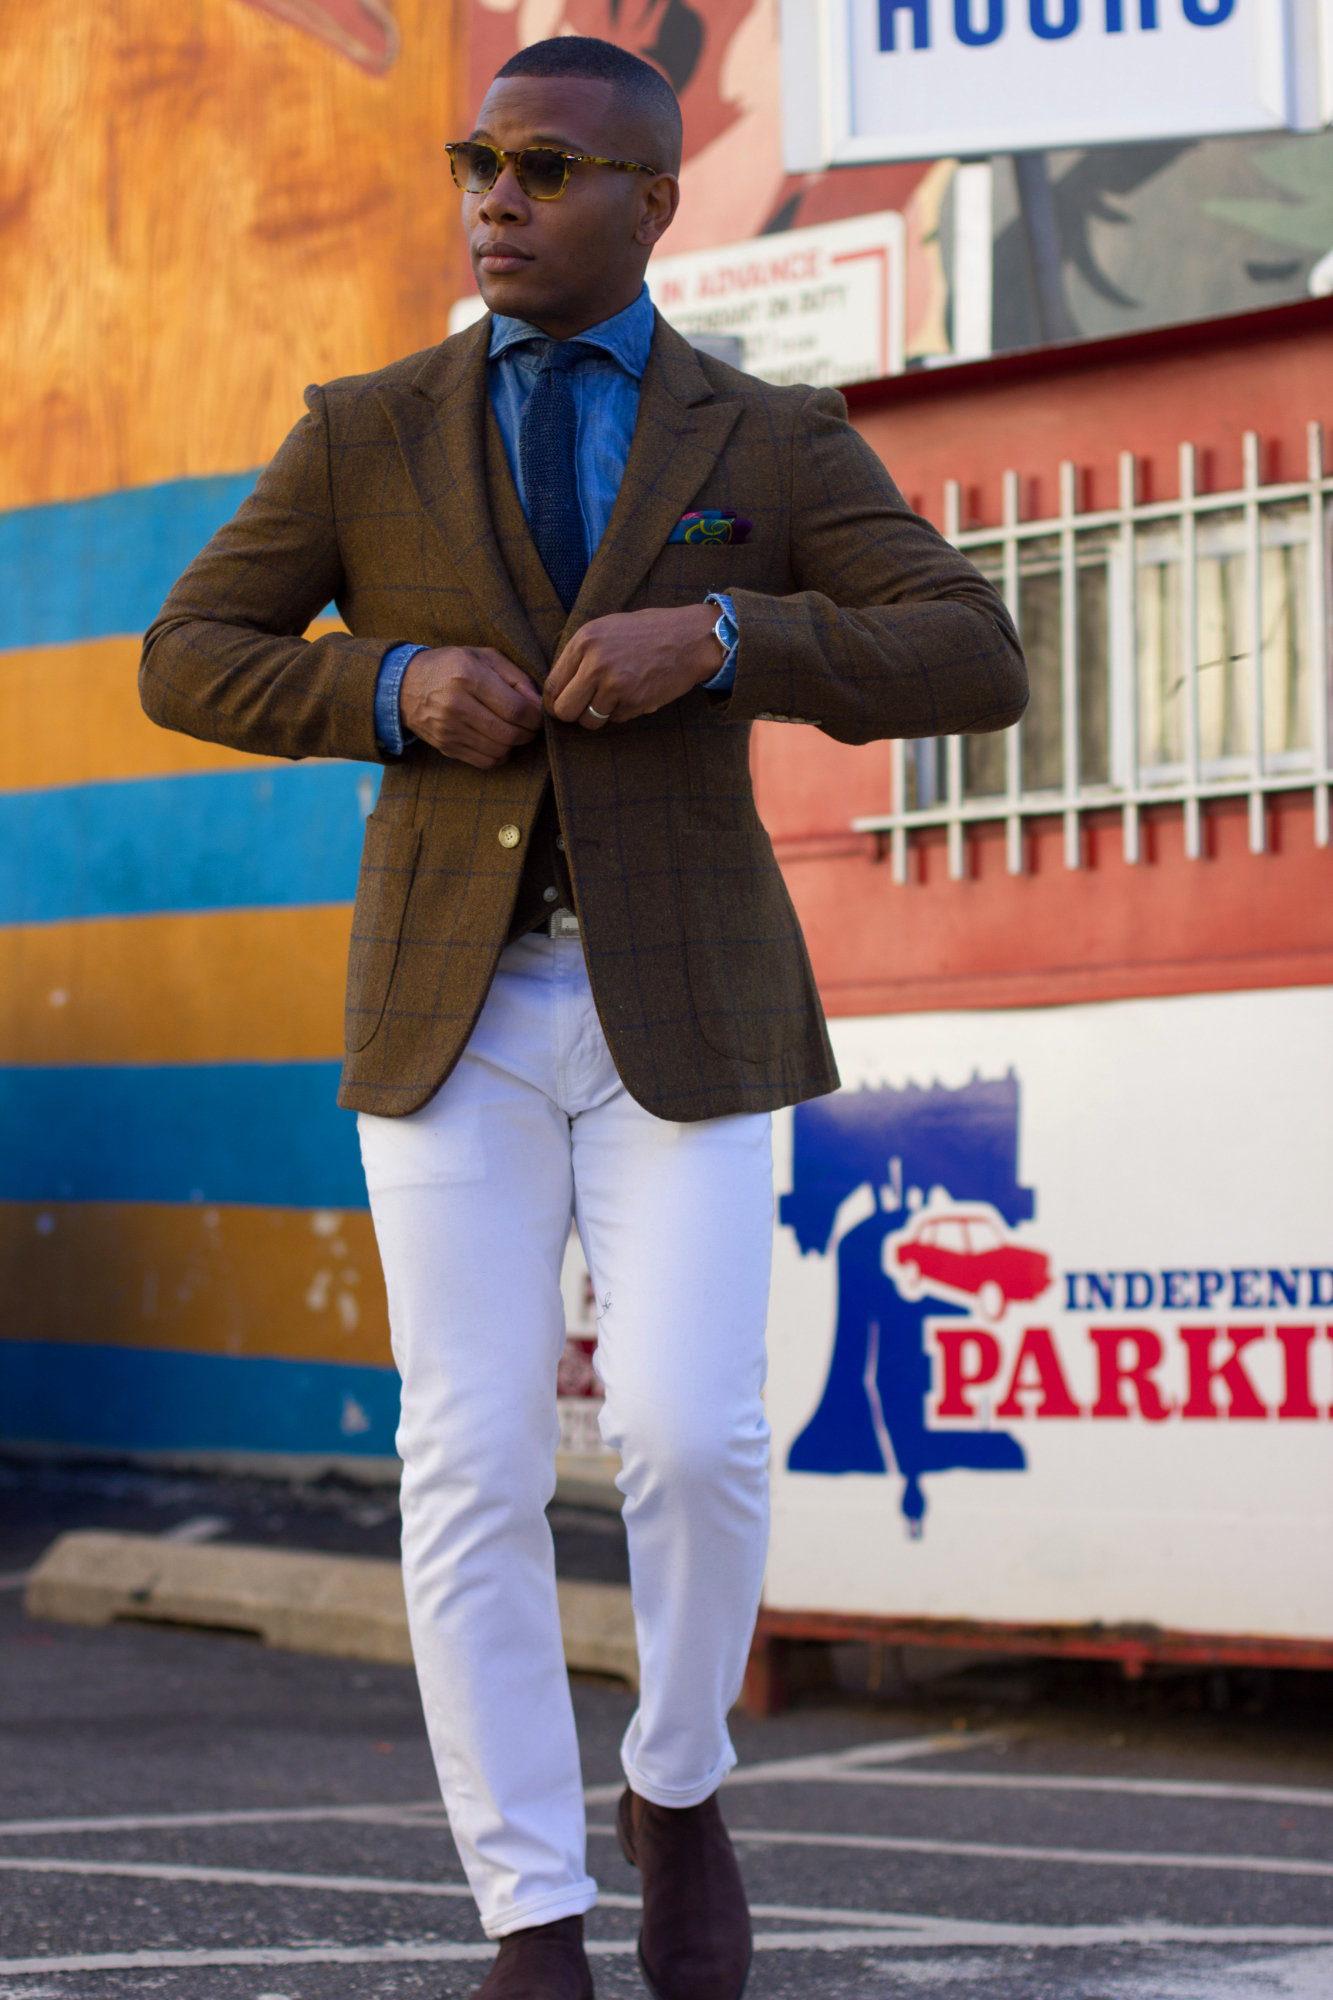 Sabir M. Peele of Men's Style Pro wearing Allen Edmonds Chelsea Boots